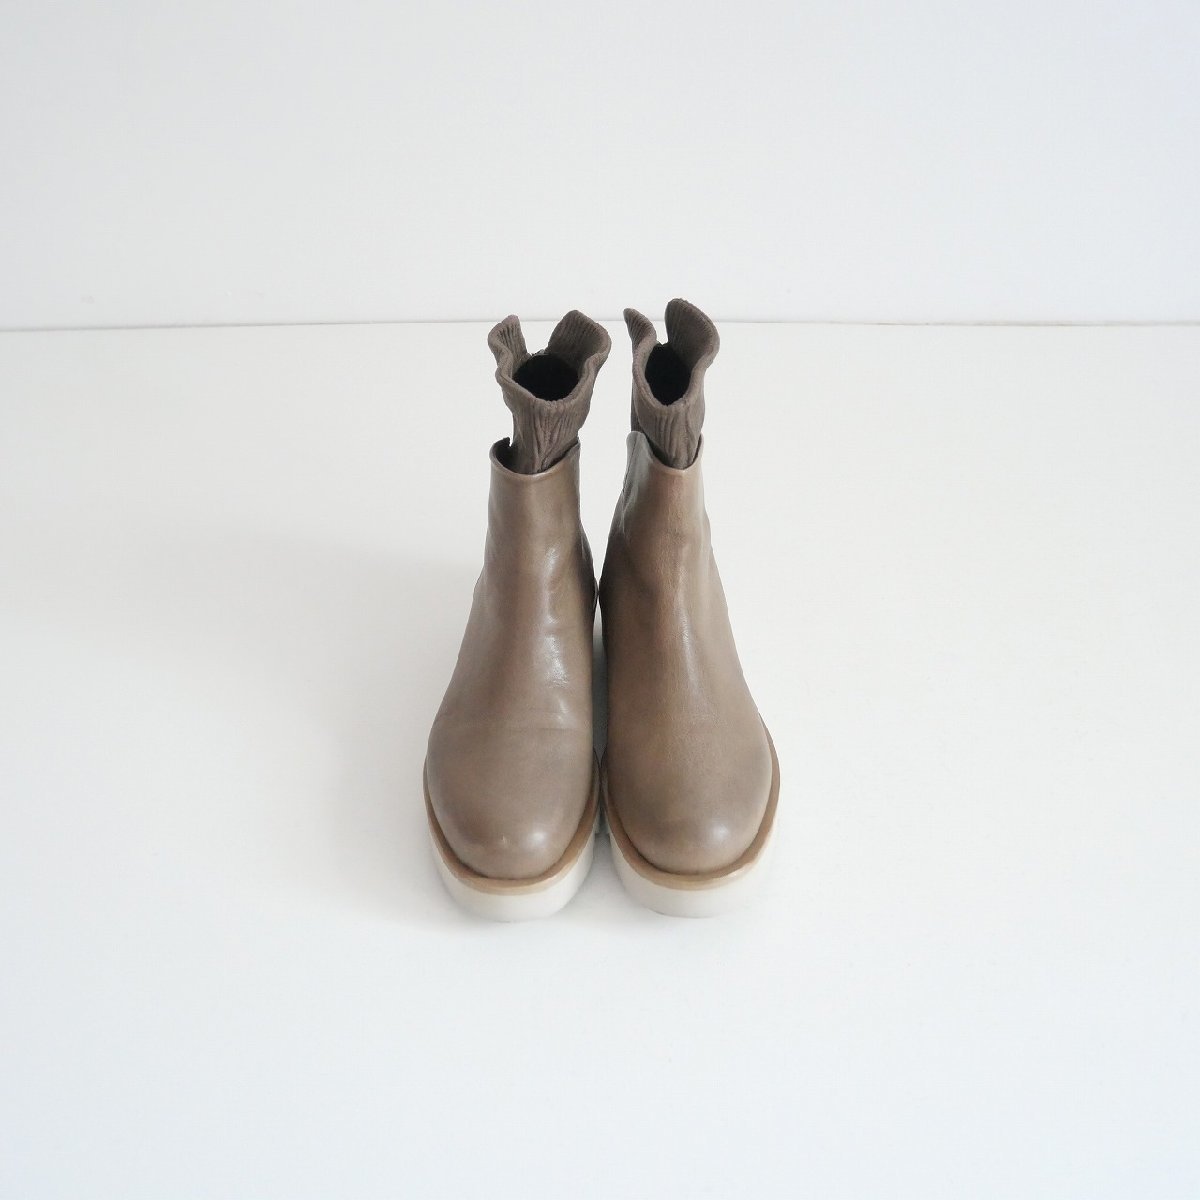 2022 / PATRIZIA BONFANTI Patricia mbon fan ti/ leather short boots YAYA 36 / PLAIN PEOPLE buy goods / 2305-0086